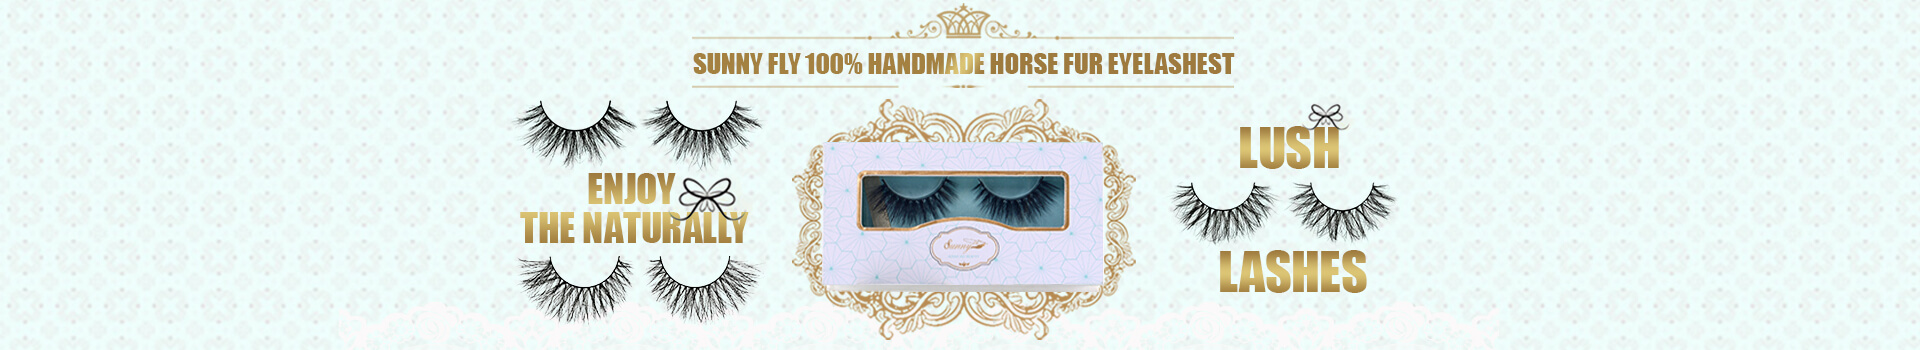 Real Horse Fur Eyesashes HF39